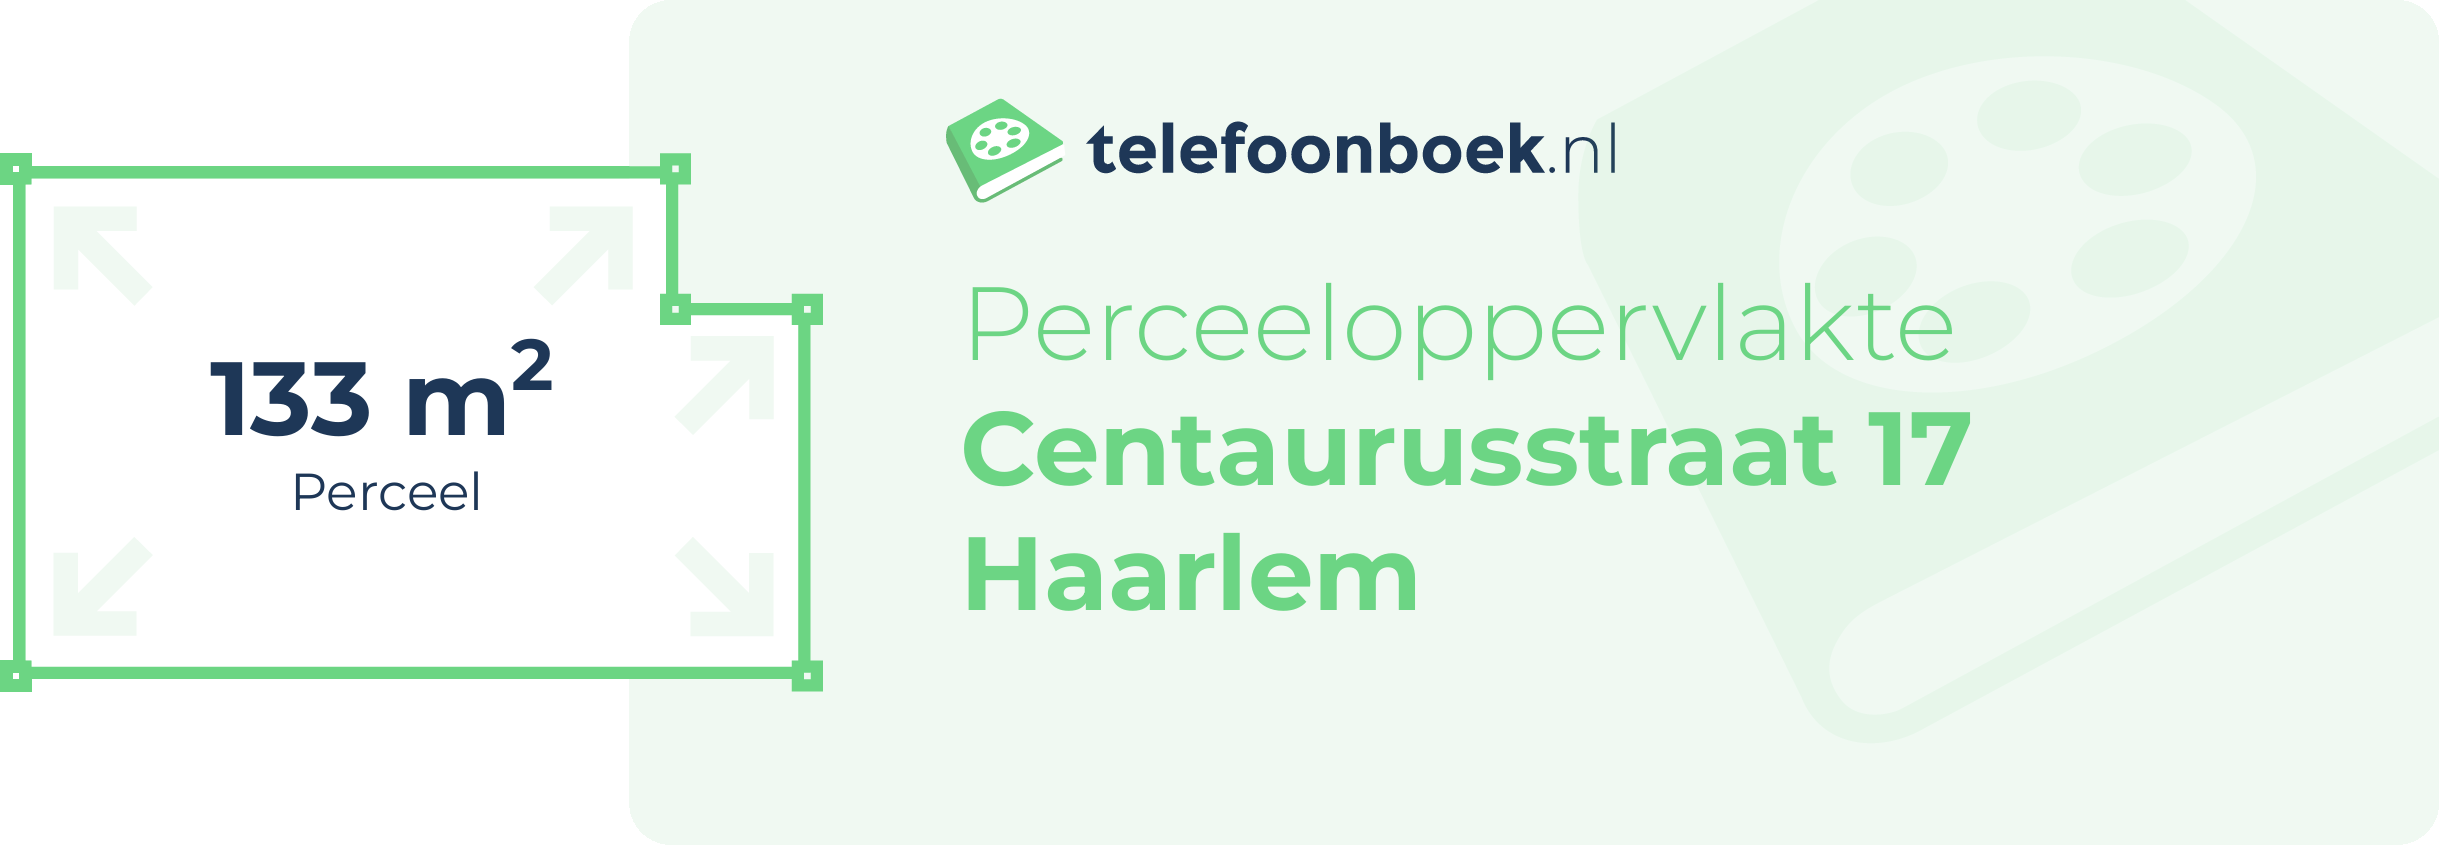 Perceeloppervlakte Centaurusstraat 17 Haarlem